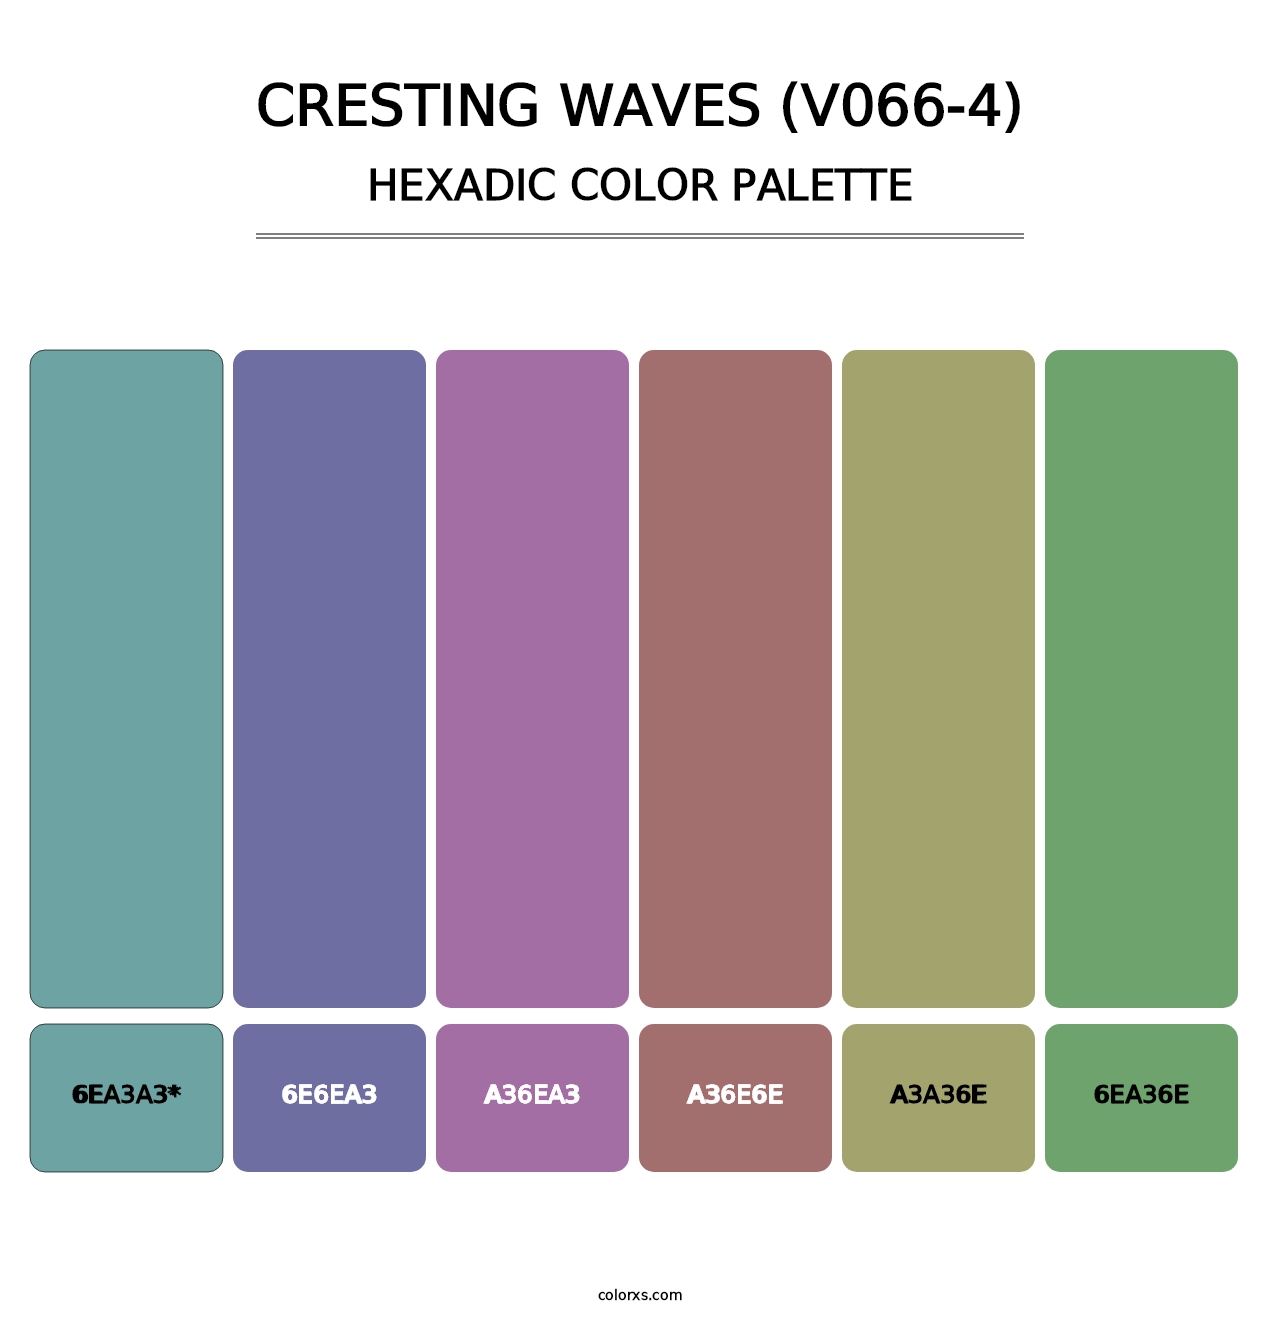 Cresting Waves (V066-4) - Hexadic Color Palette